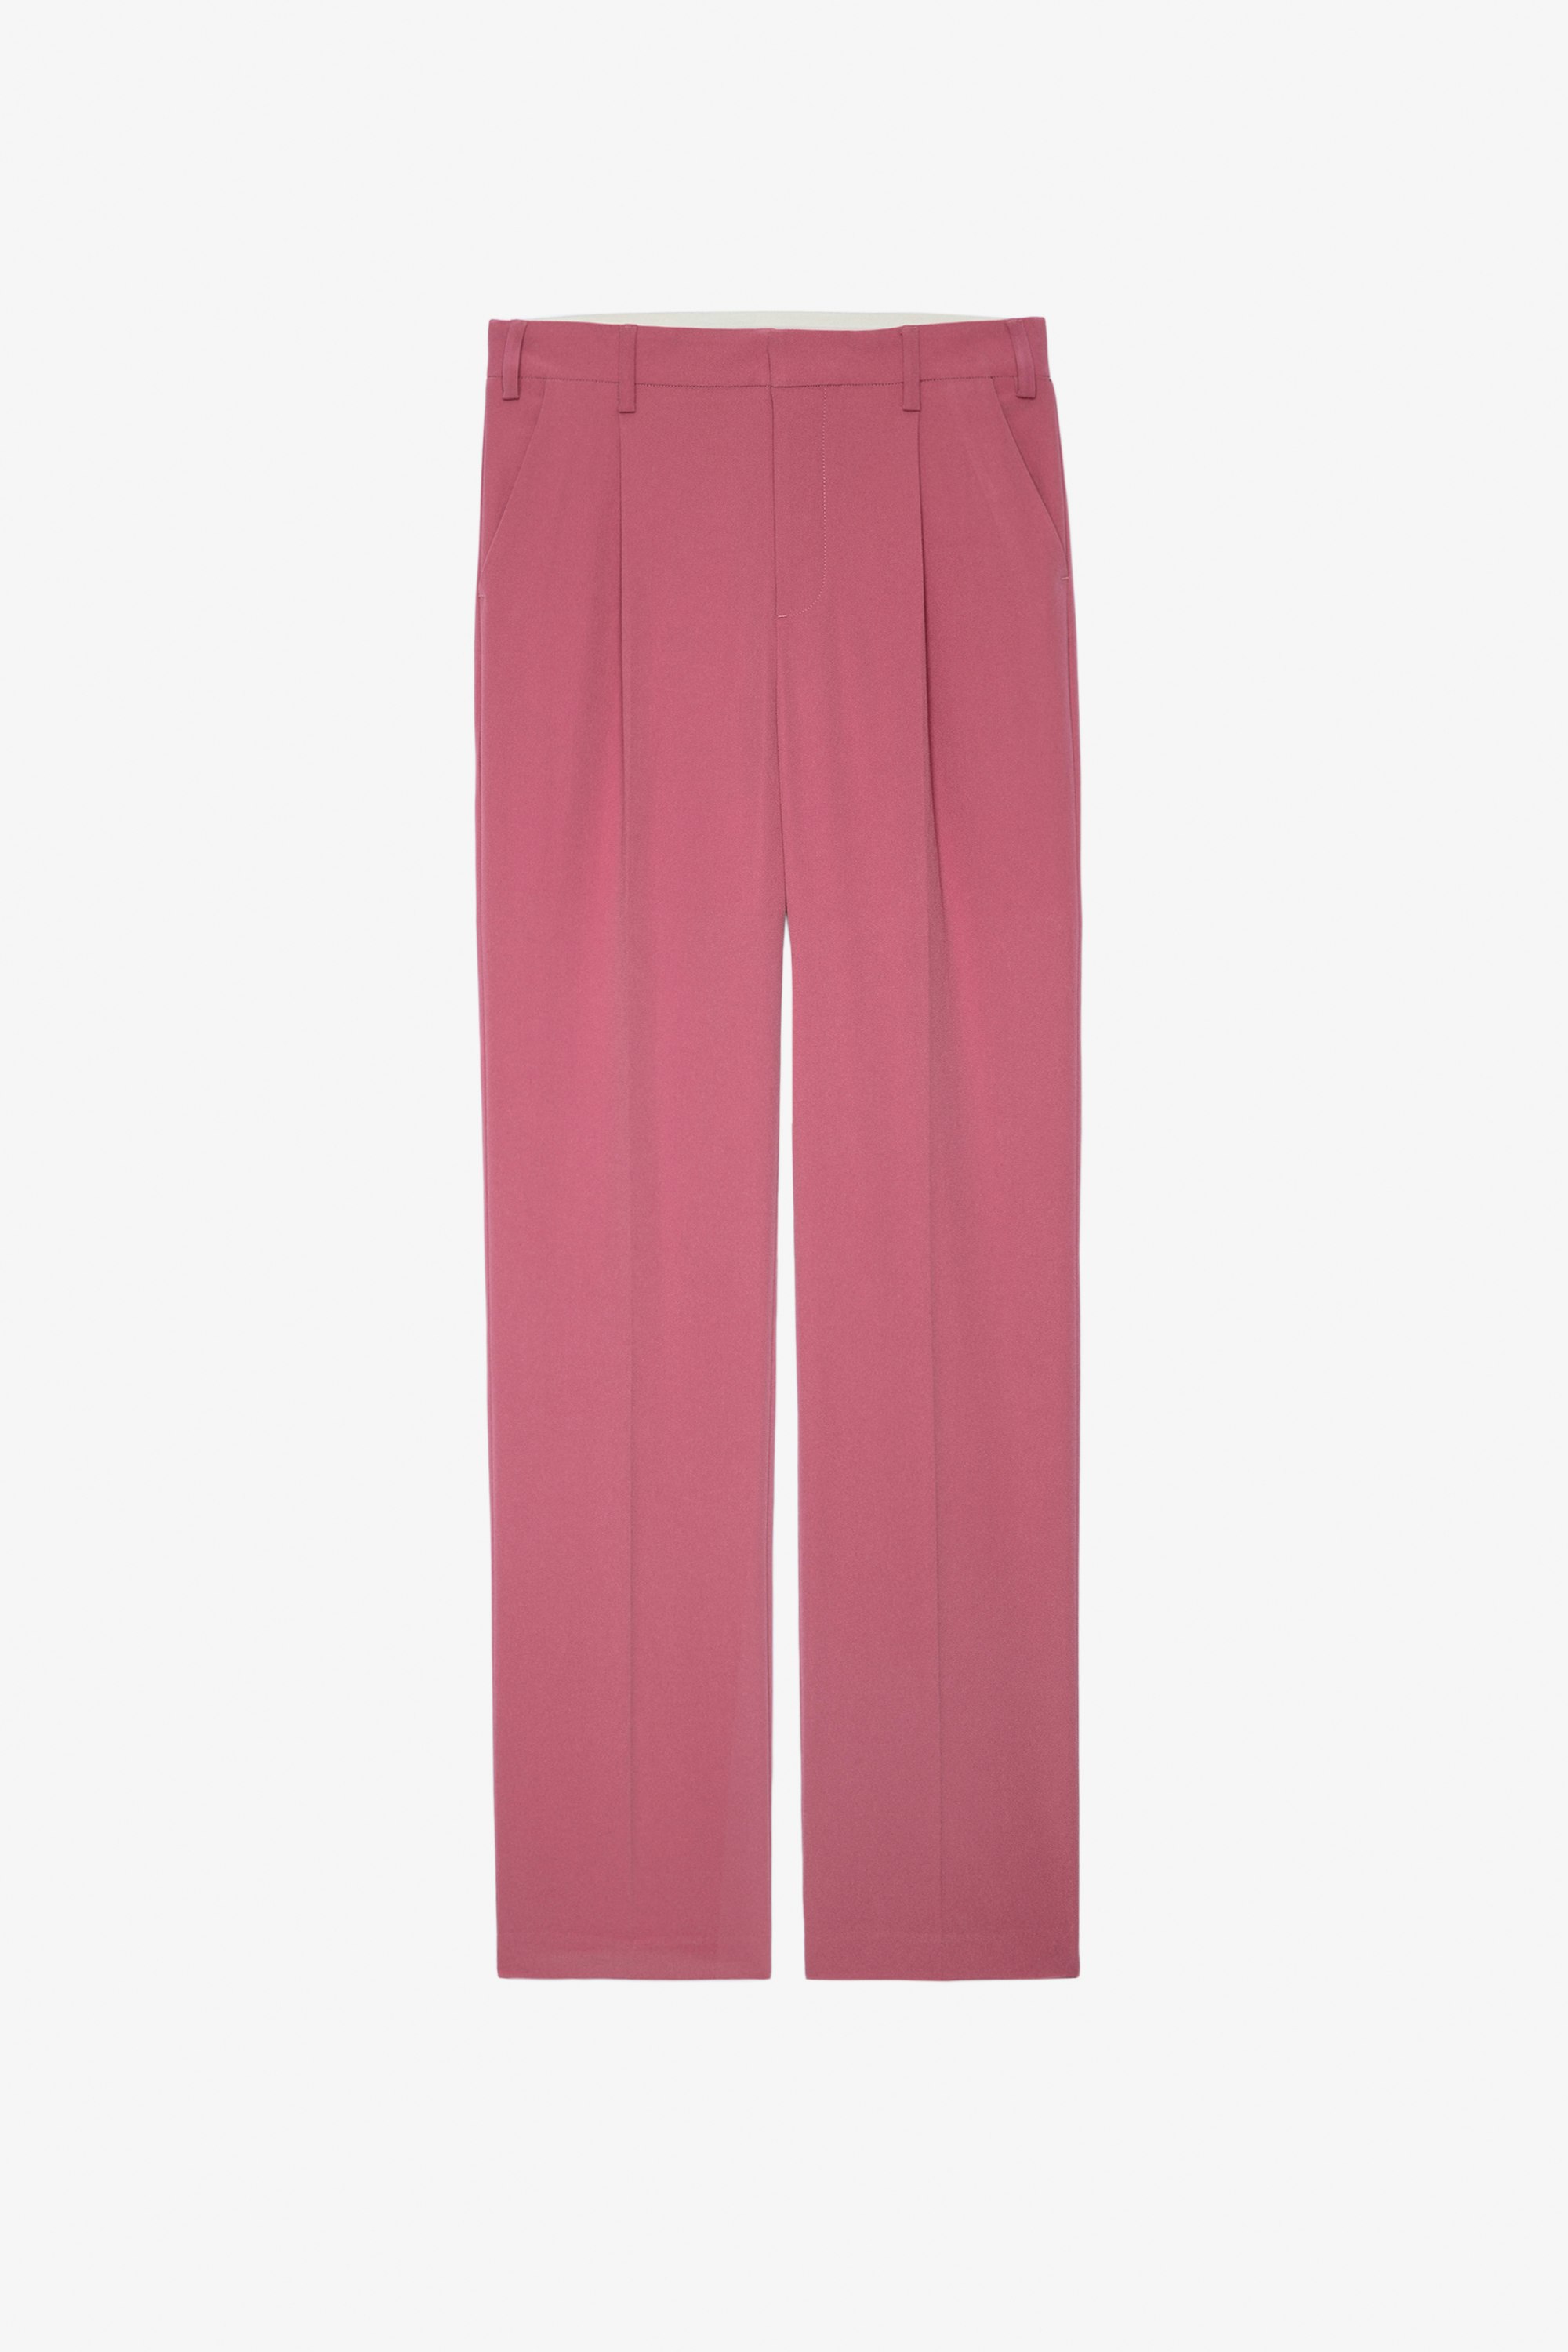 Profil Trousers Women's wide-leg pink crepe trousers